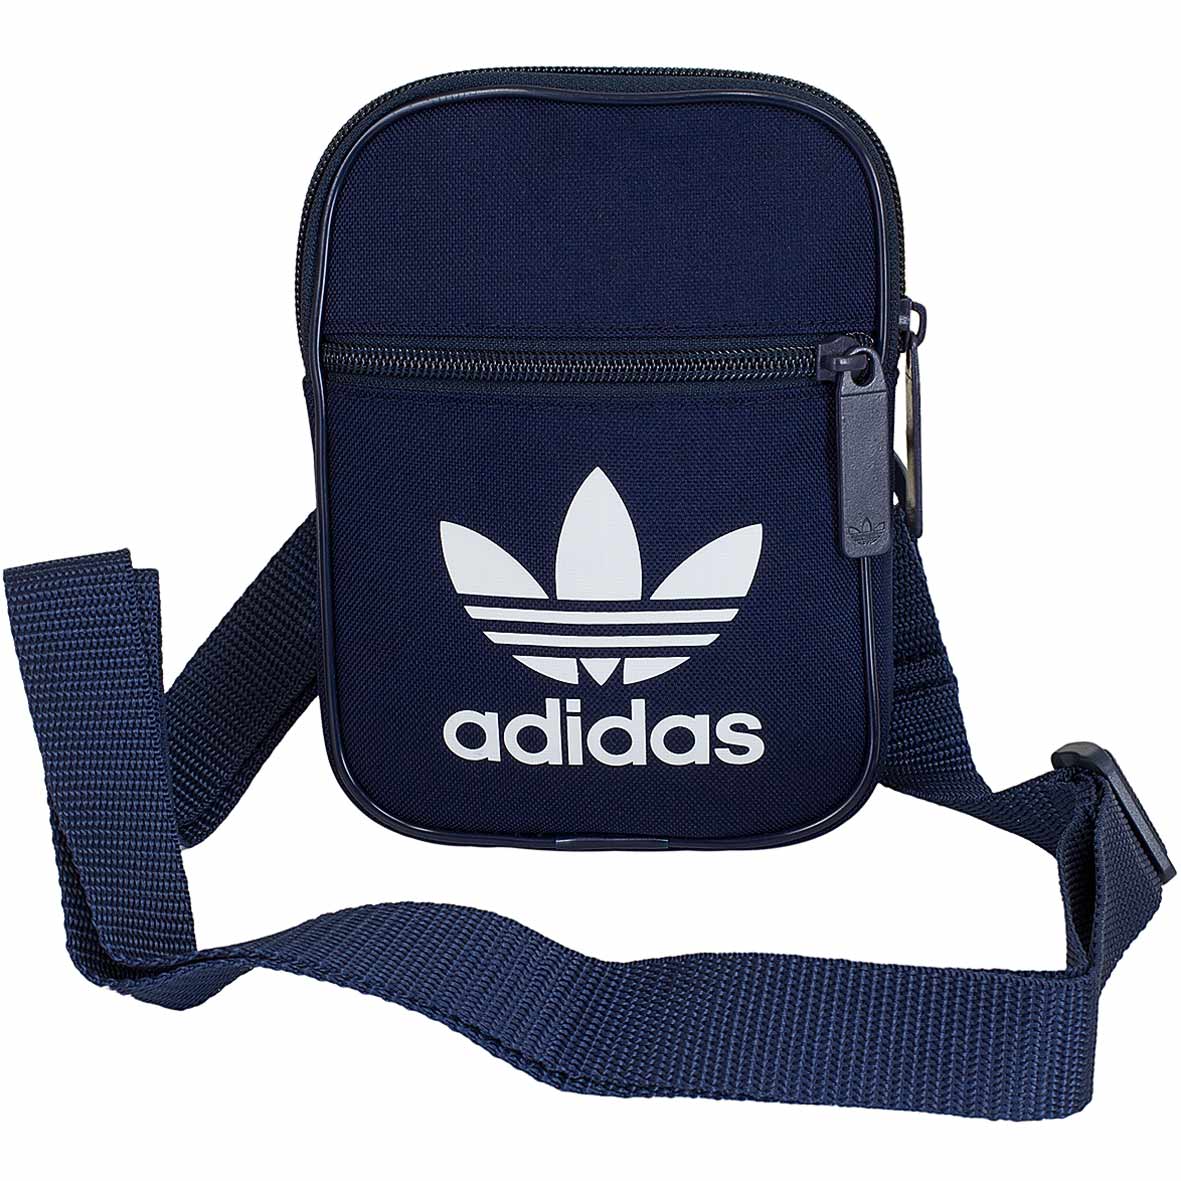 ☆ Adidas Originals Festival Bag Trefoil navy dunkelblau - hier bestellen!